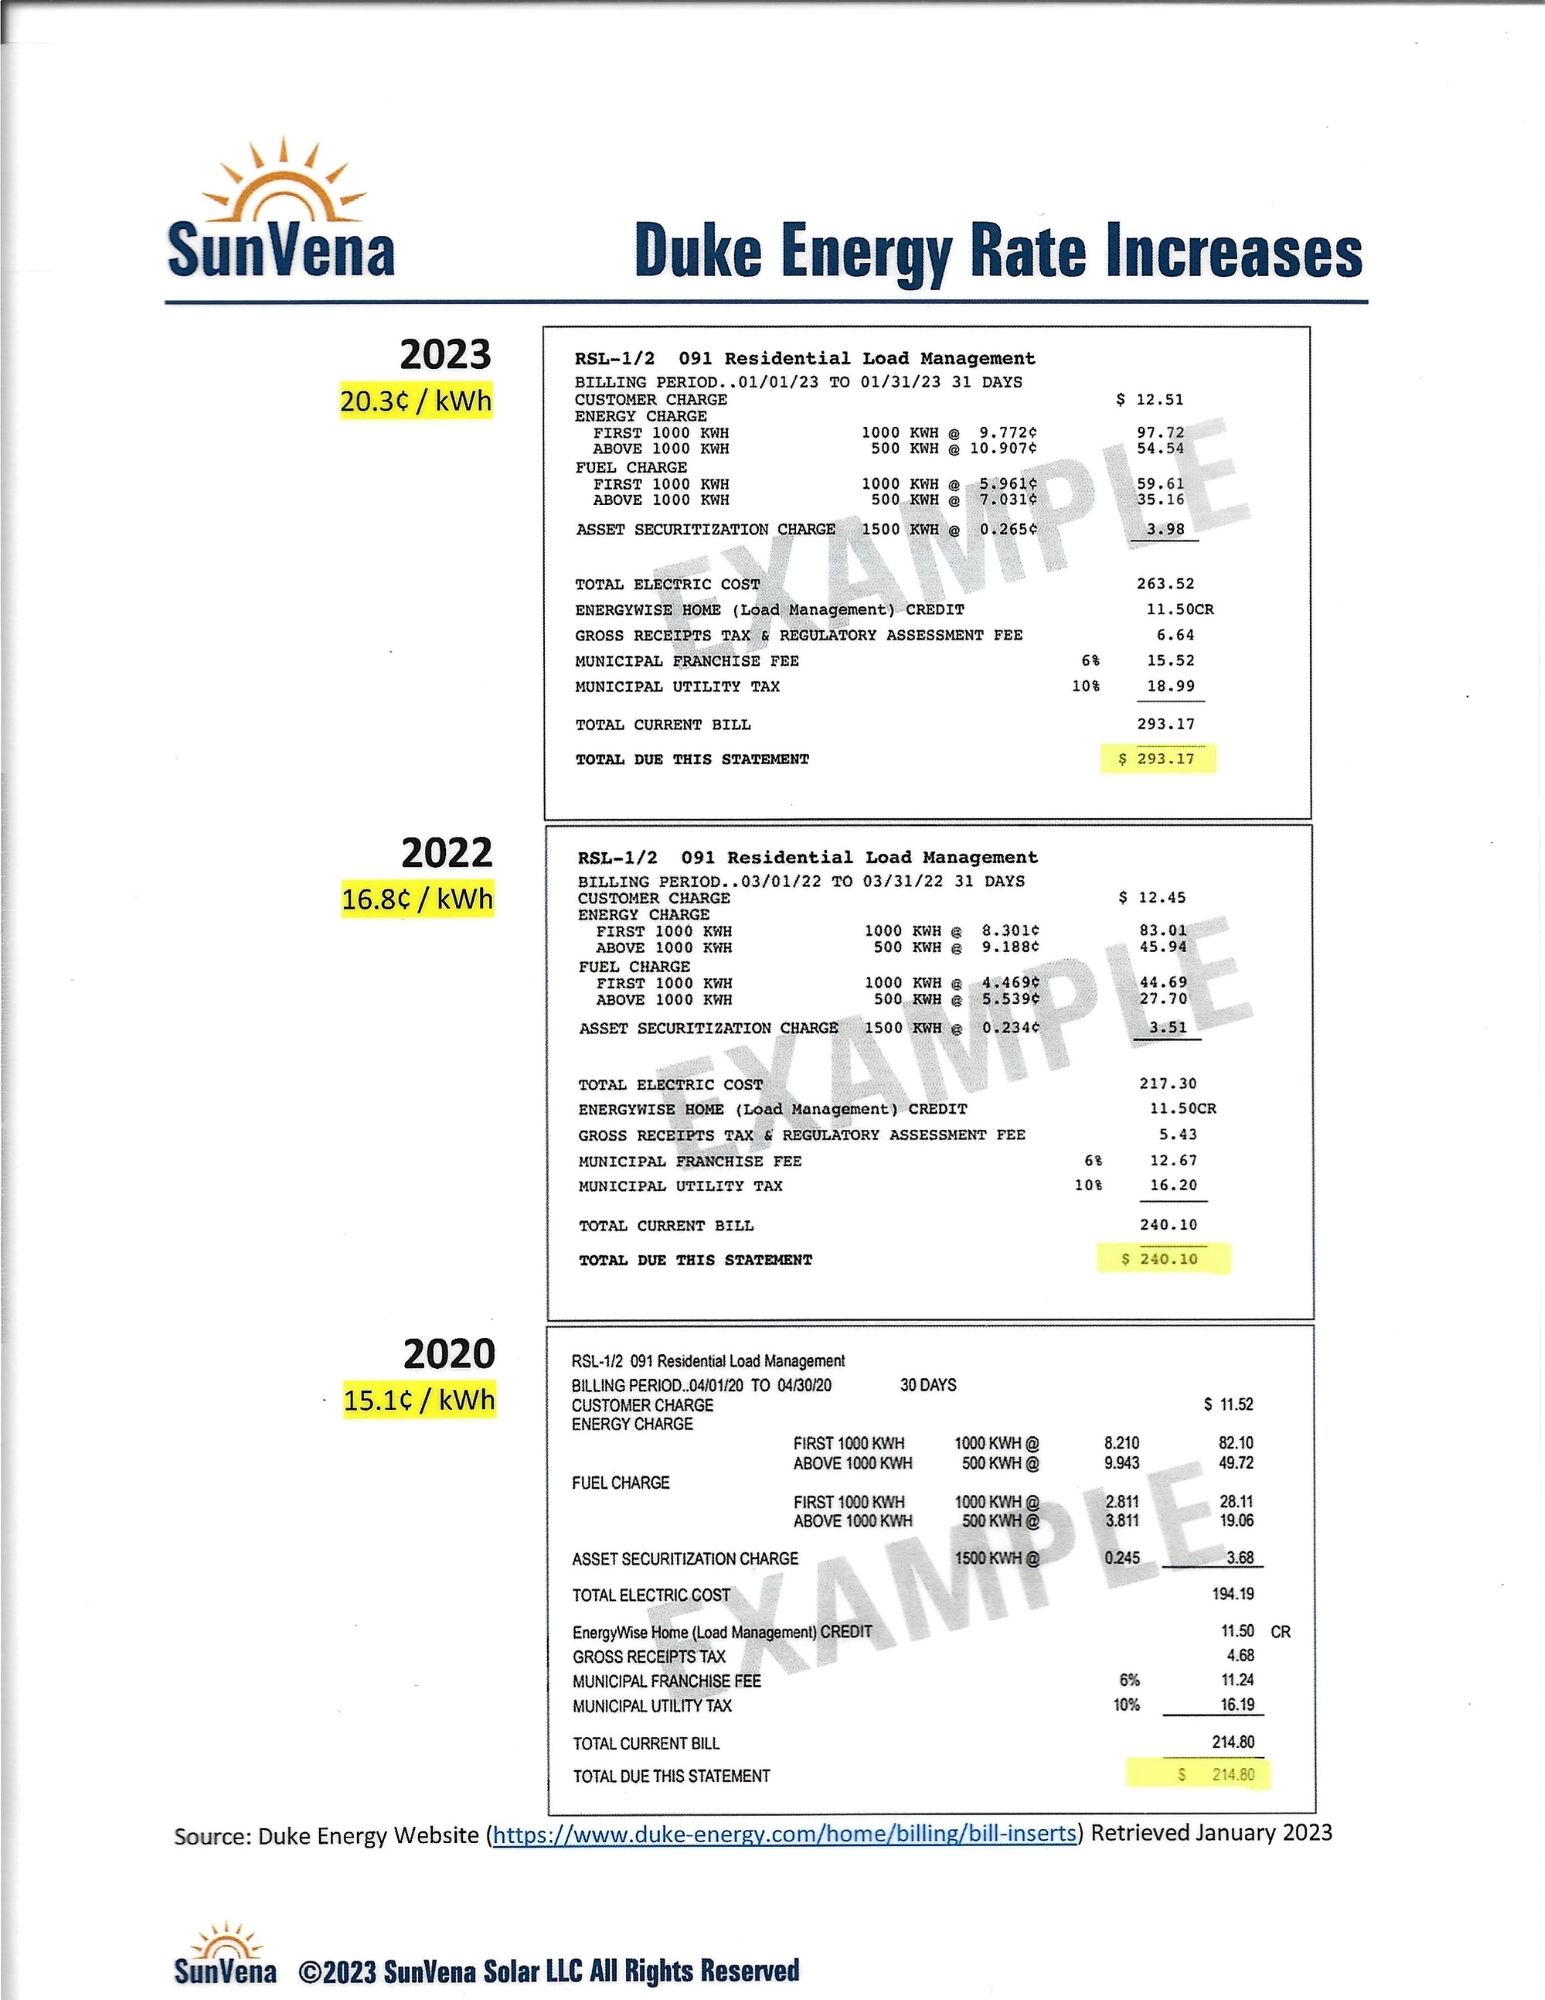 Duke Energy Rate Increase 2023